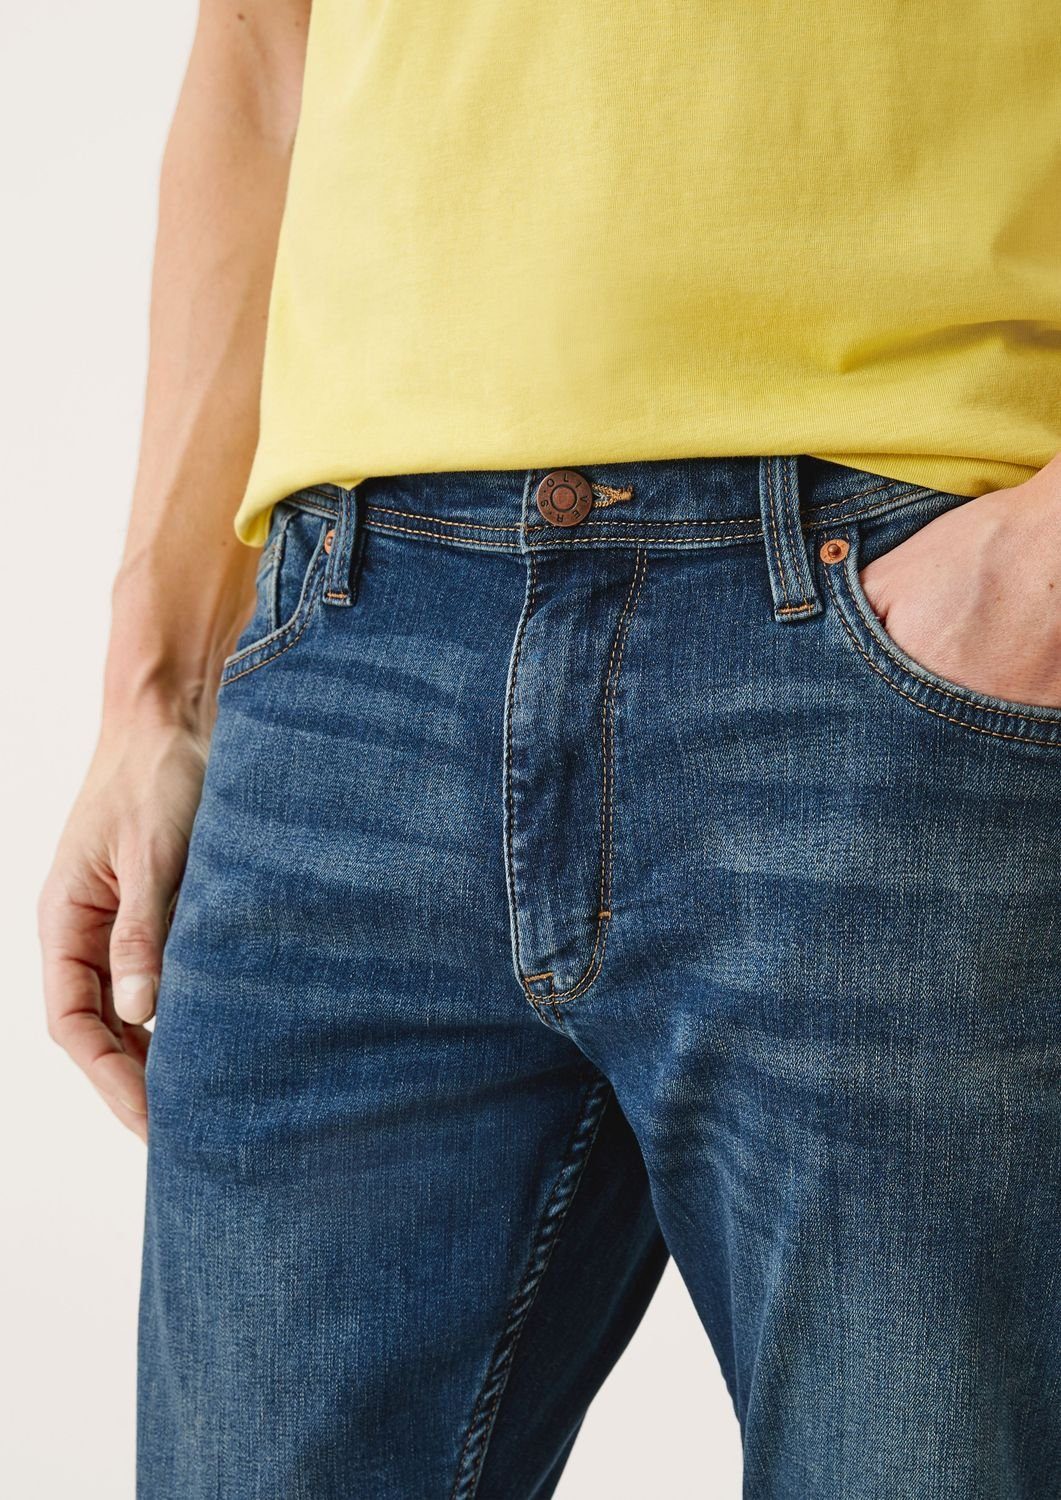 s.Oliver Slim-fit-Jeans KEITH Slim Fit, Beinverlauf: Straight Medium rise, Leg Blau Bundhöhe